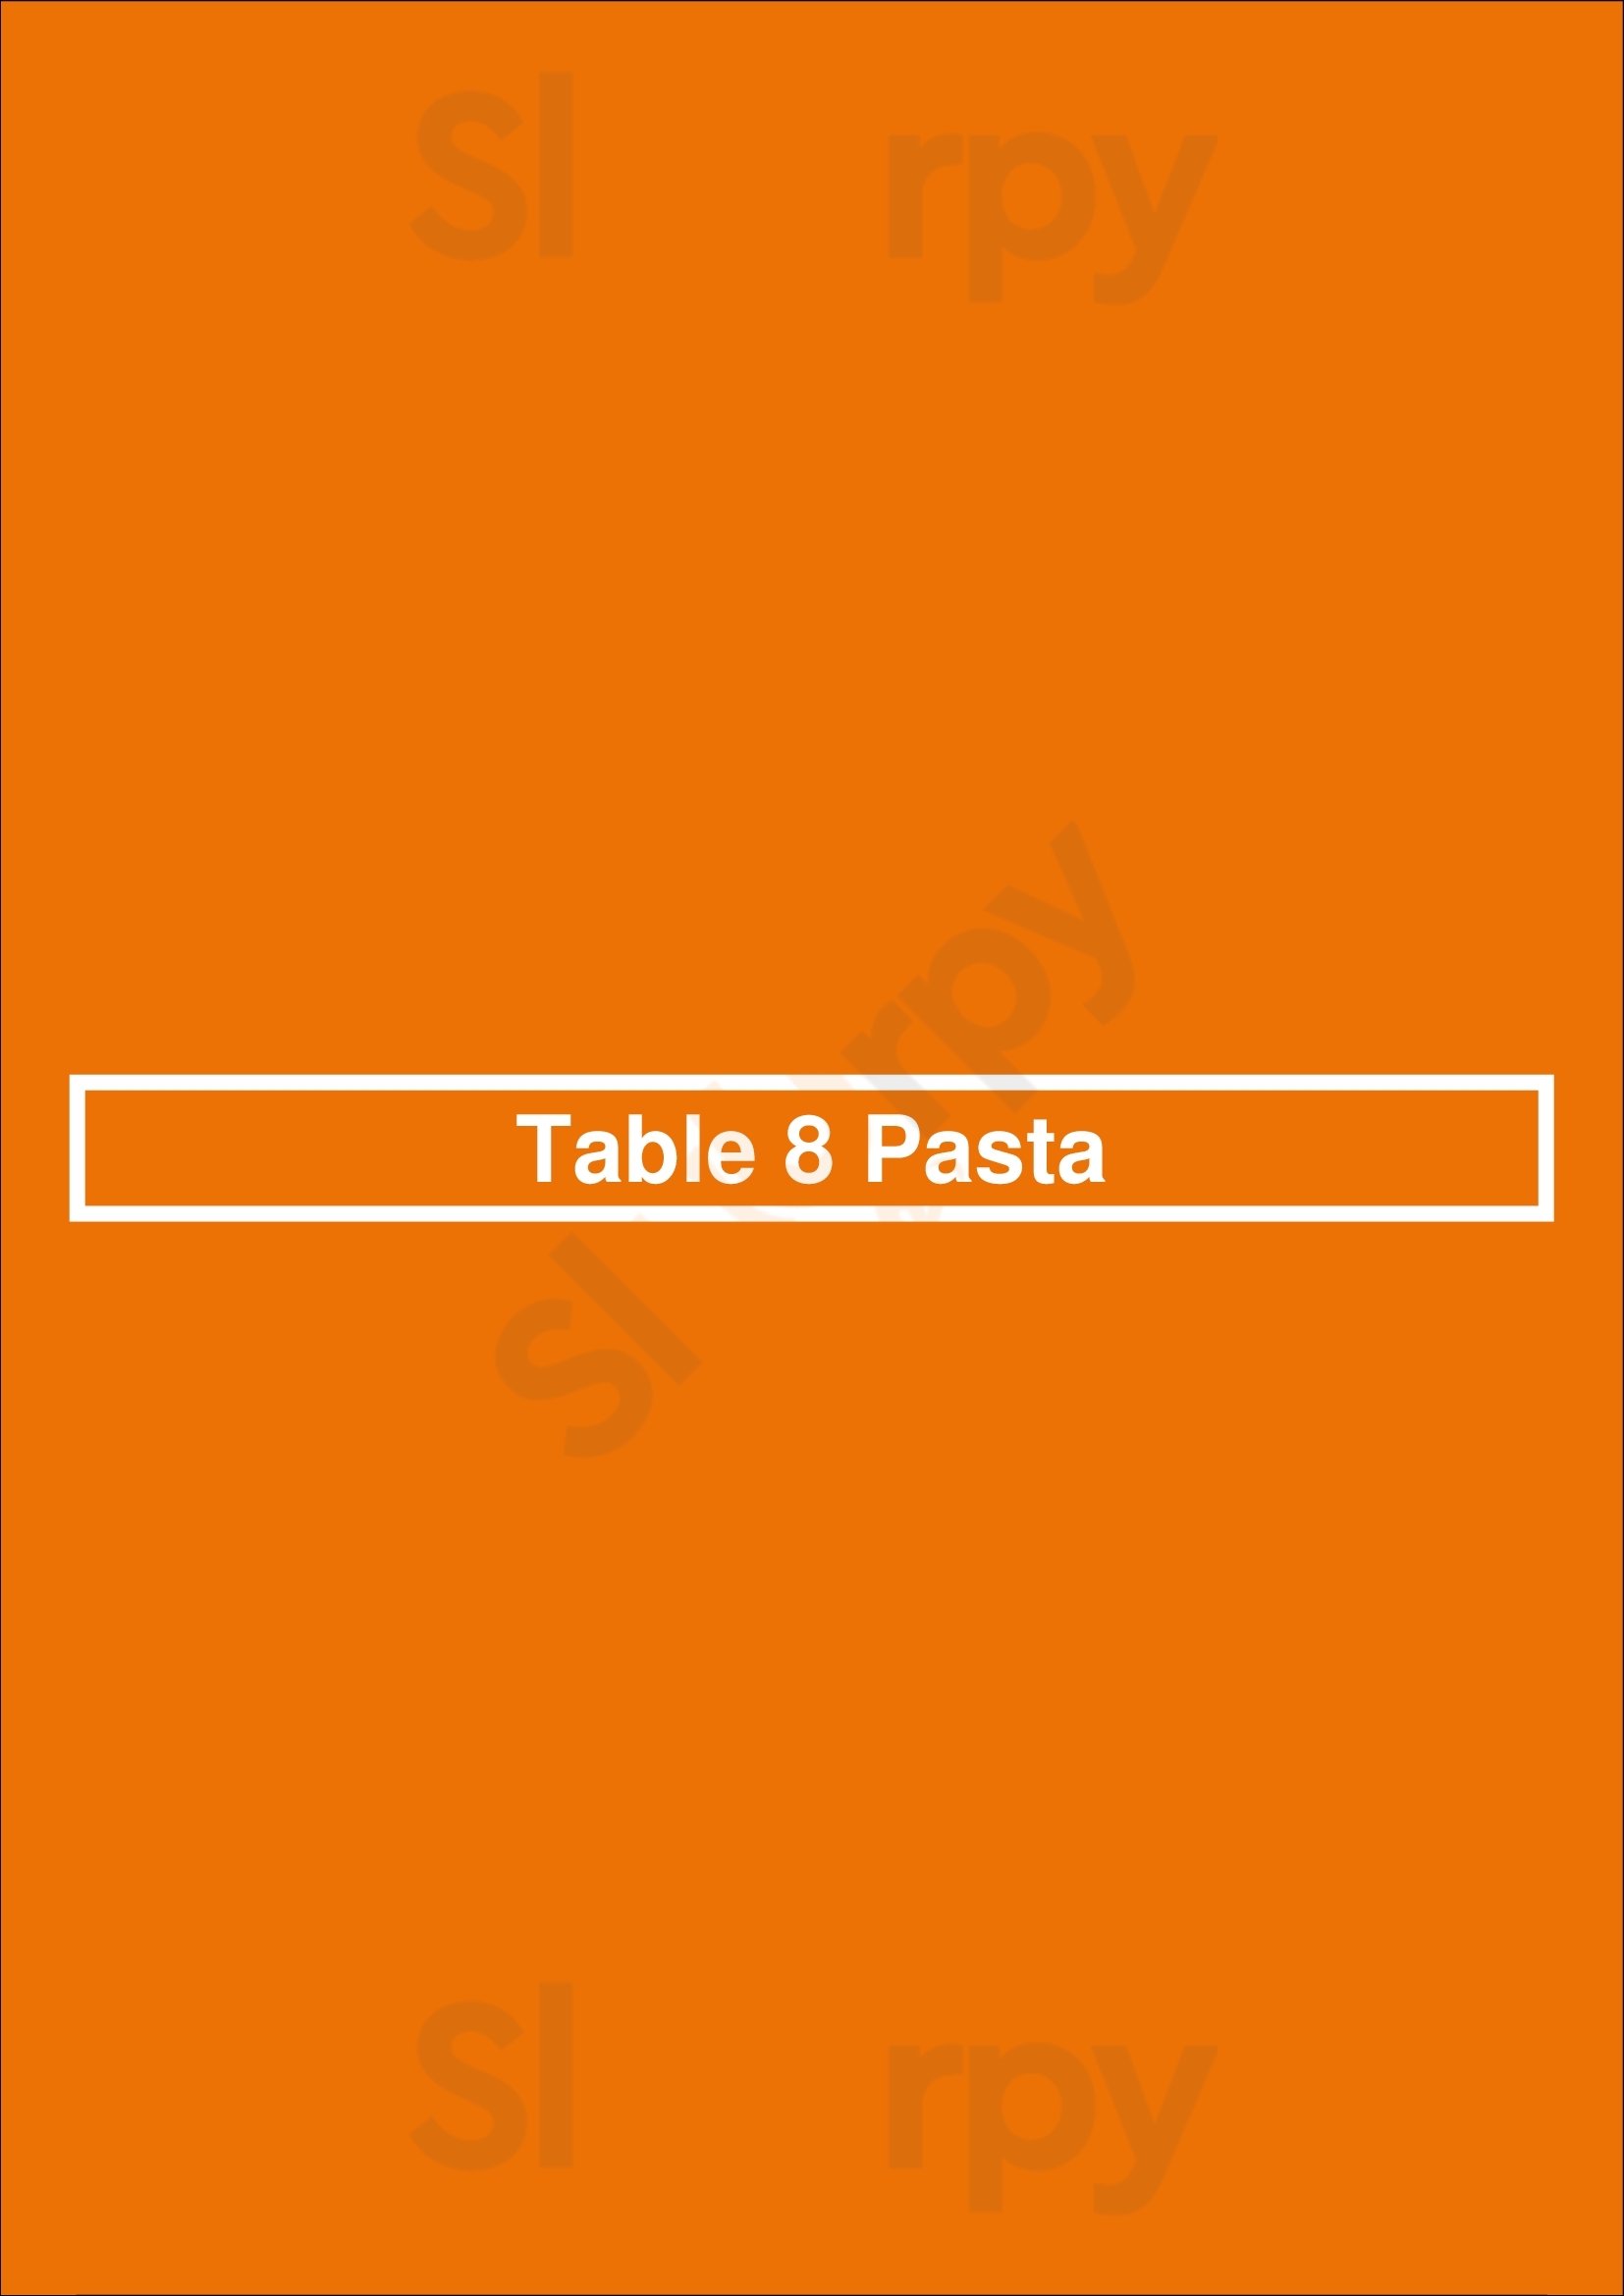 Table 8 Pasta Bedford Menu - 1